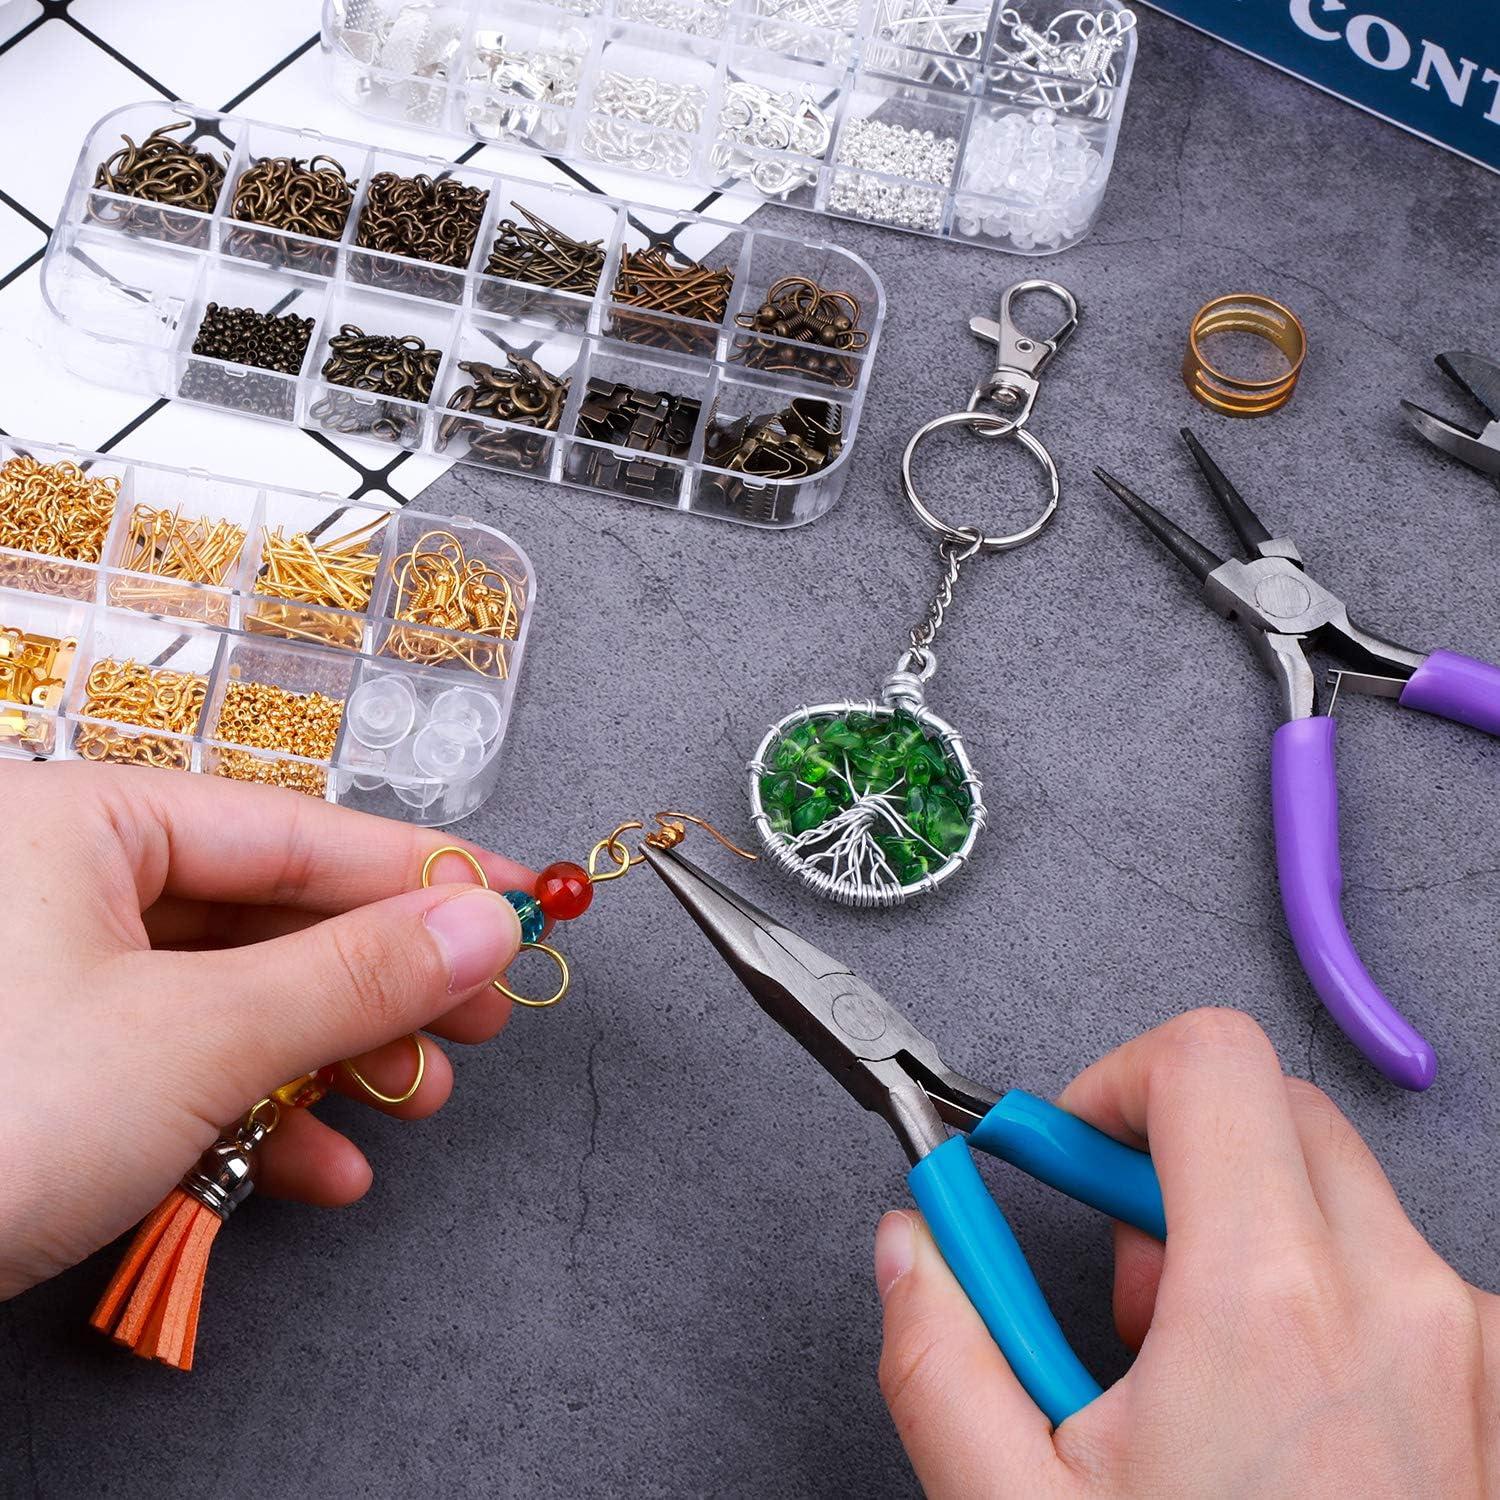 Jewelry Making Kit Jewelry Tools Ring Sizer Measuring Tools Kit Jewelry Pliers Jewelry Findings for Jewelry Repair and Making Jewelry Making